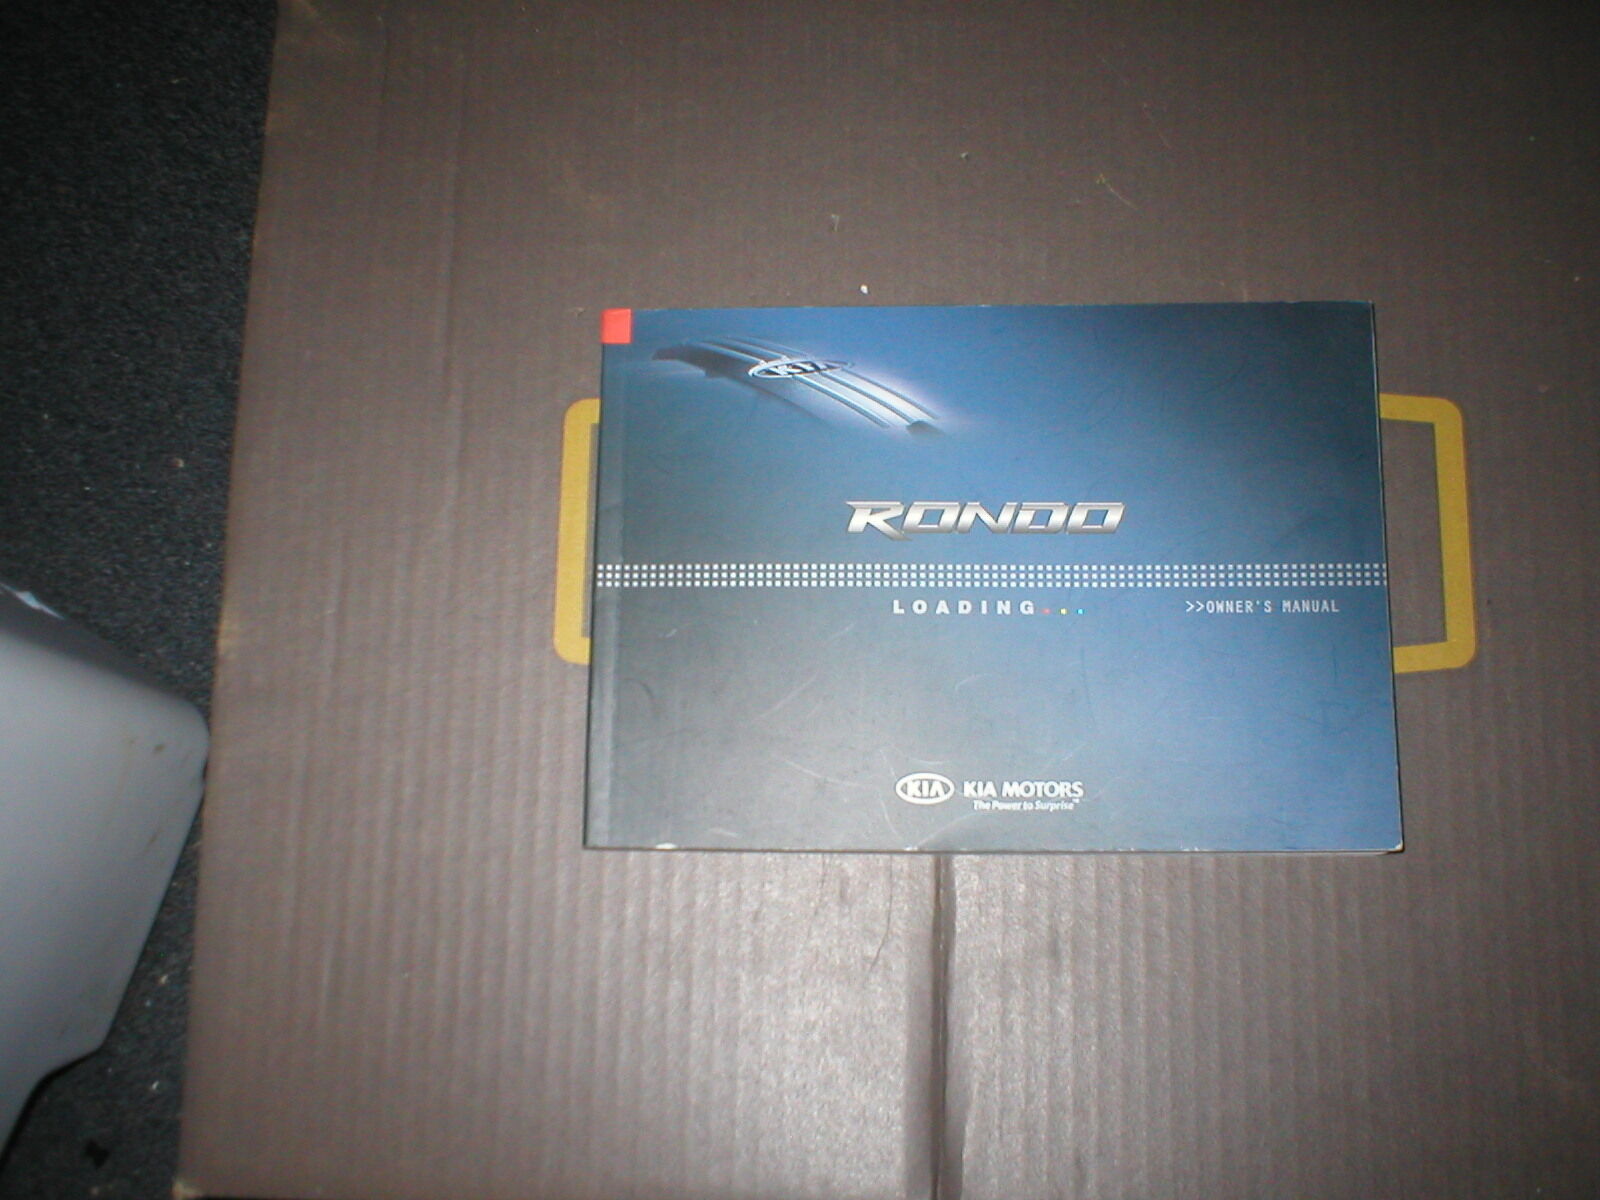 2007 Kia Rondo owners manual